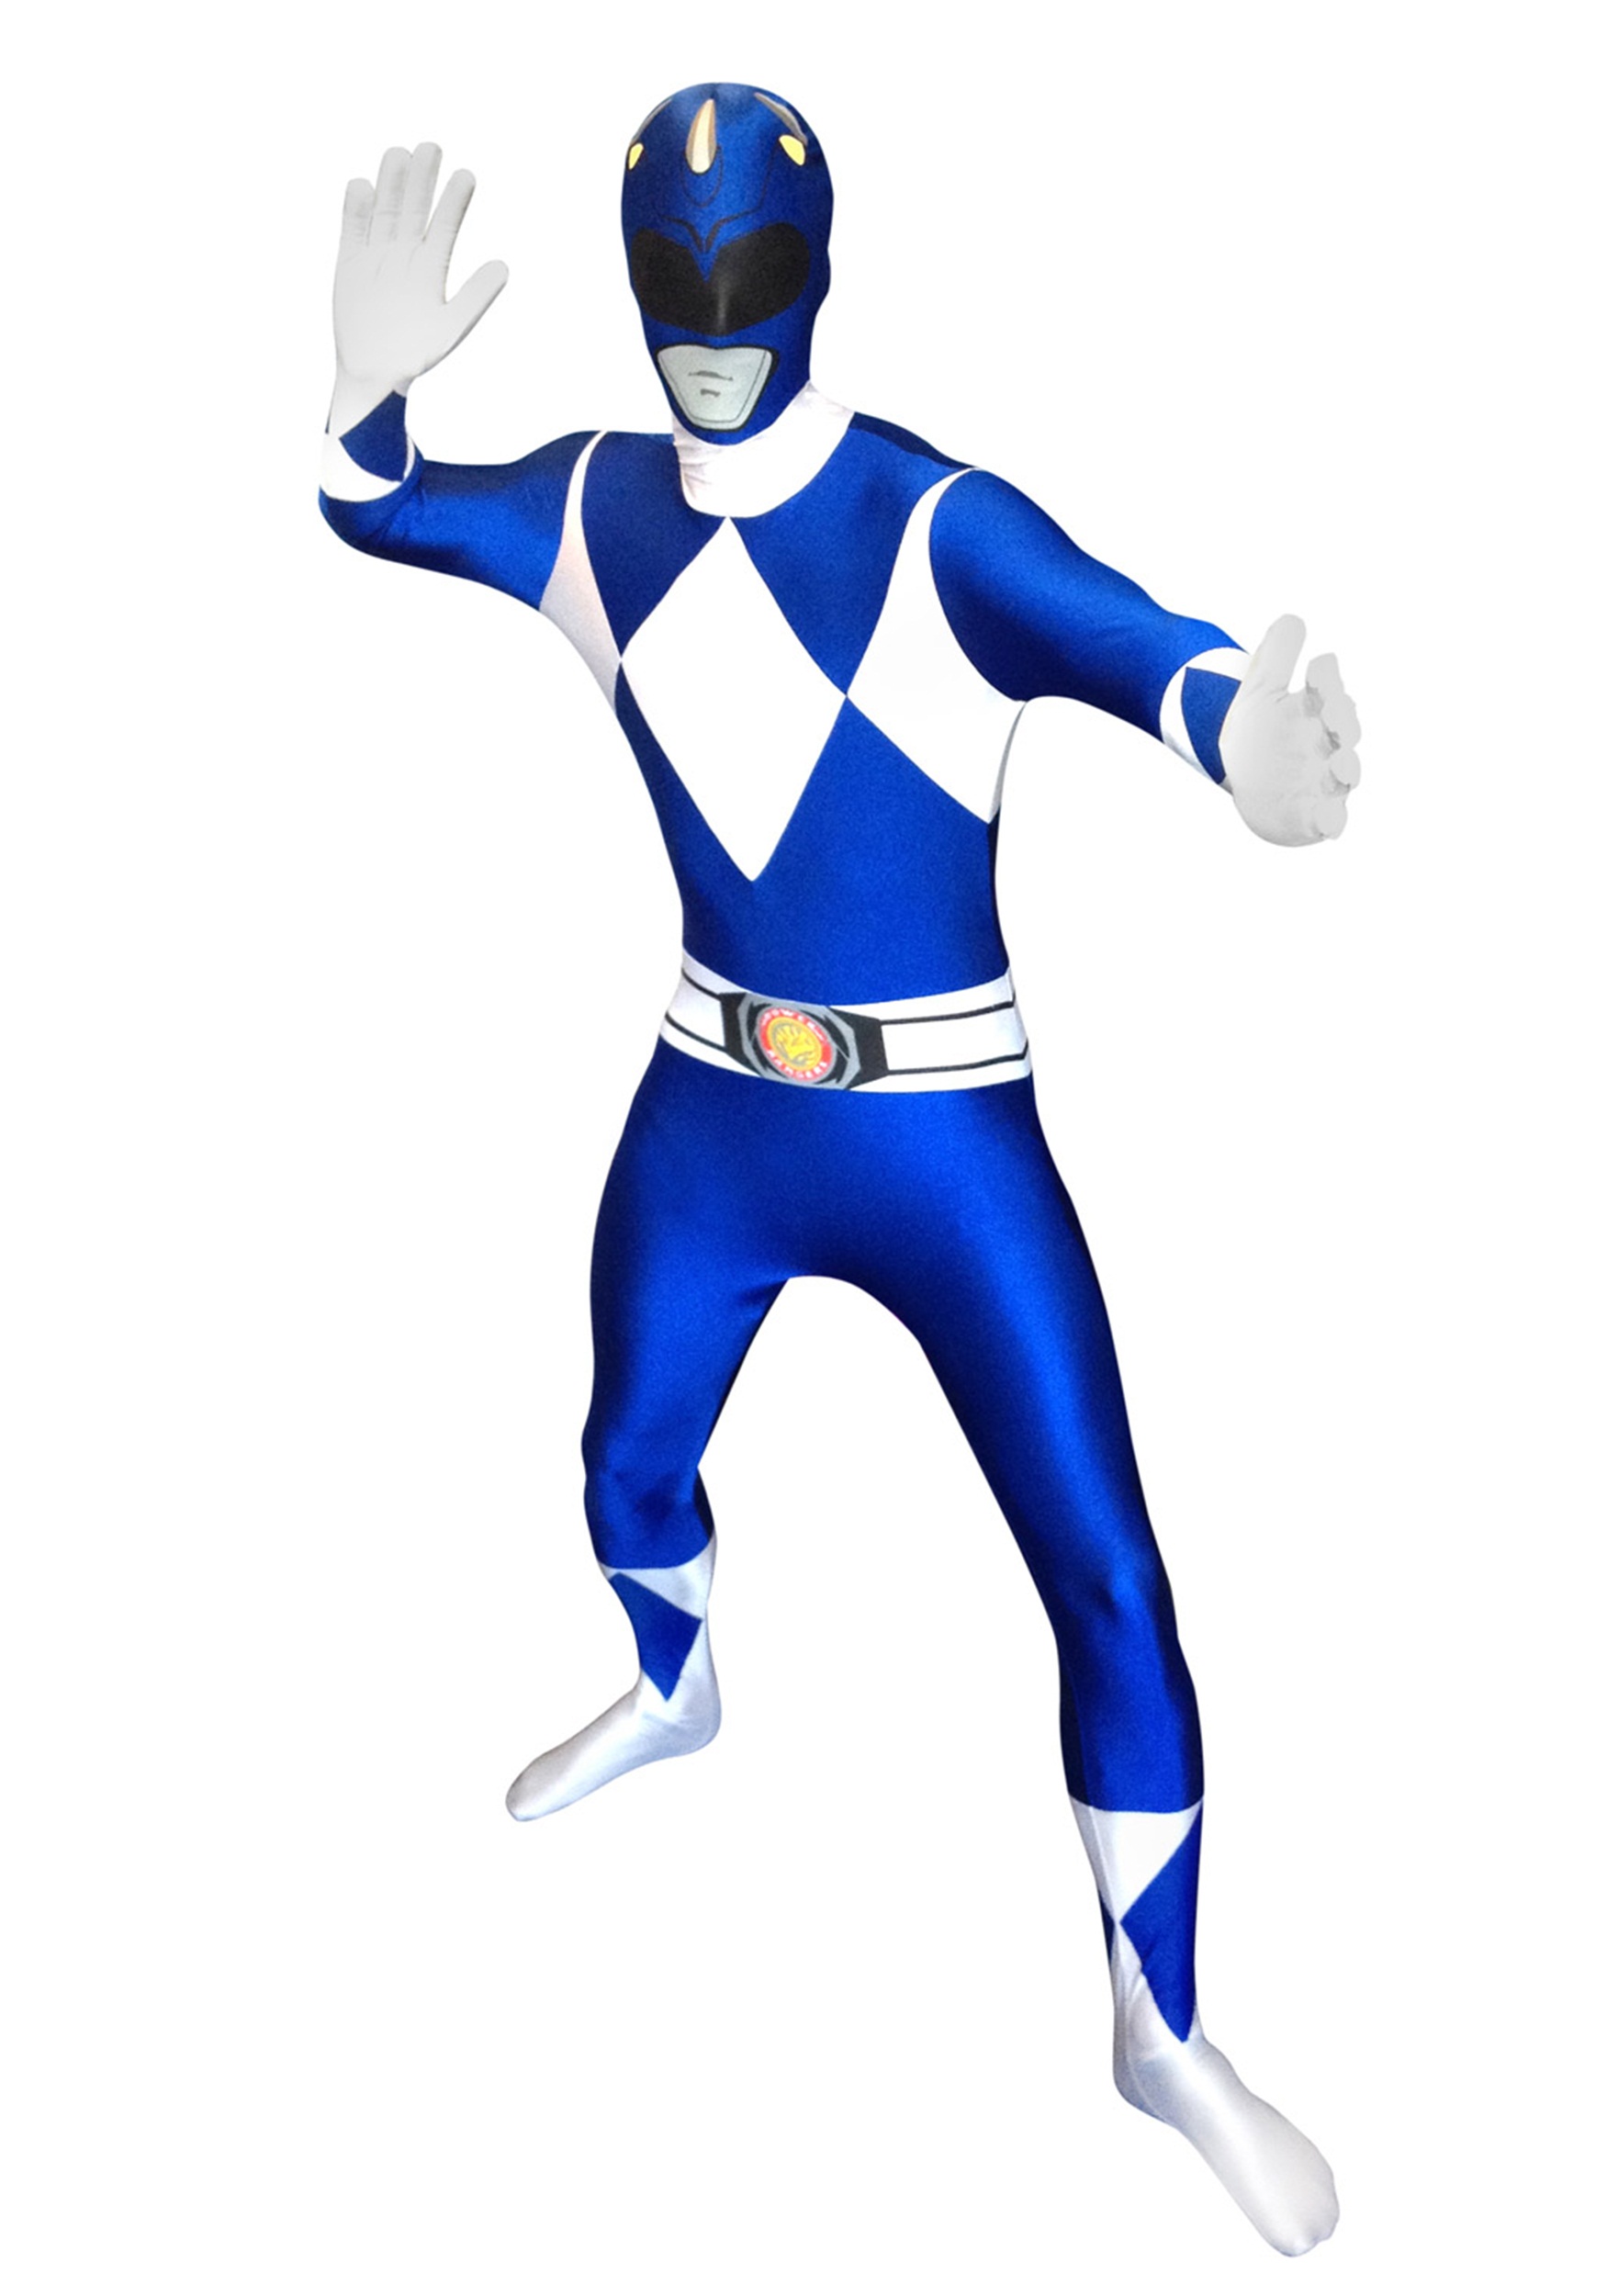 BRAND NEW GENUINE  Blue Power Ranger Morph-suit Deluxe  SIZE LARGE 887513031307 